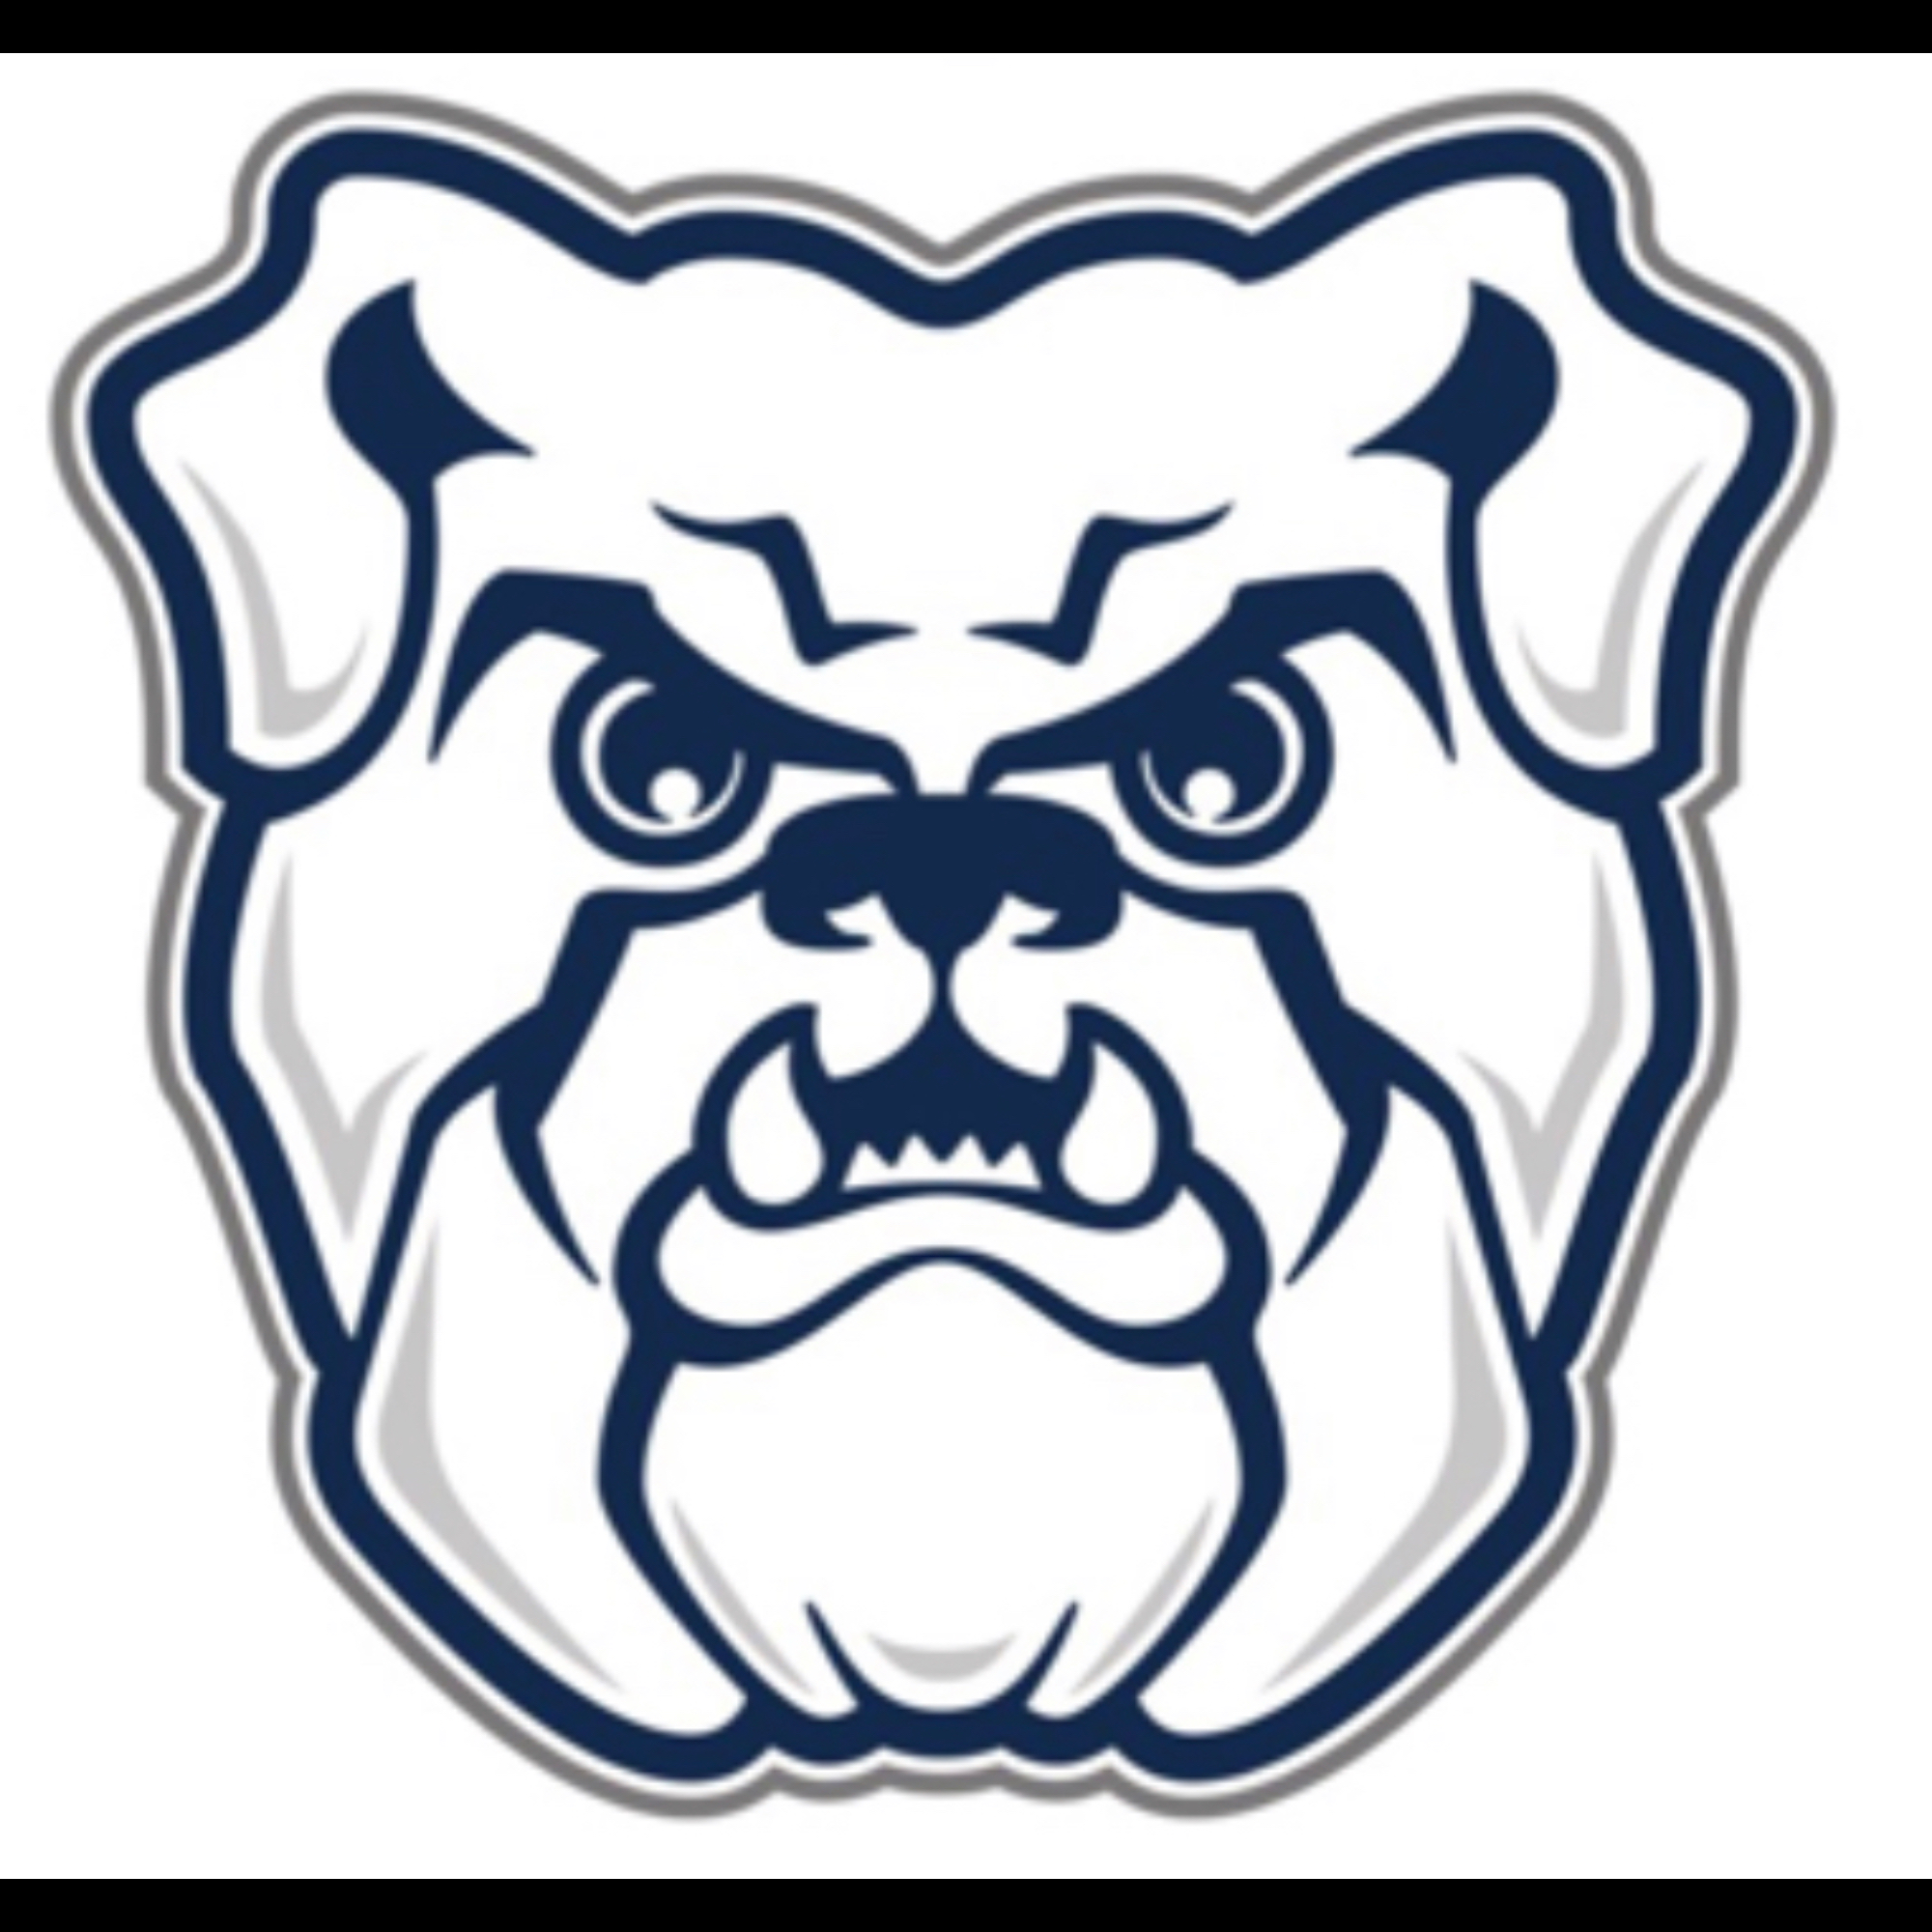 The official logo of Bulldog Elite